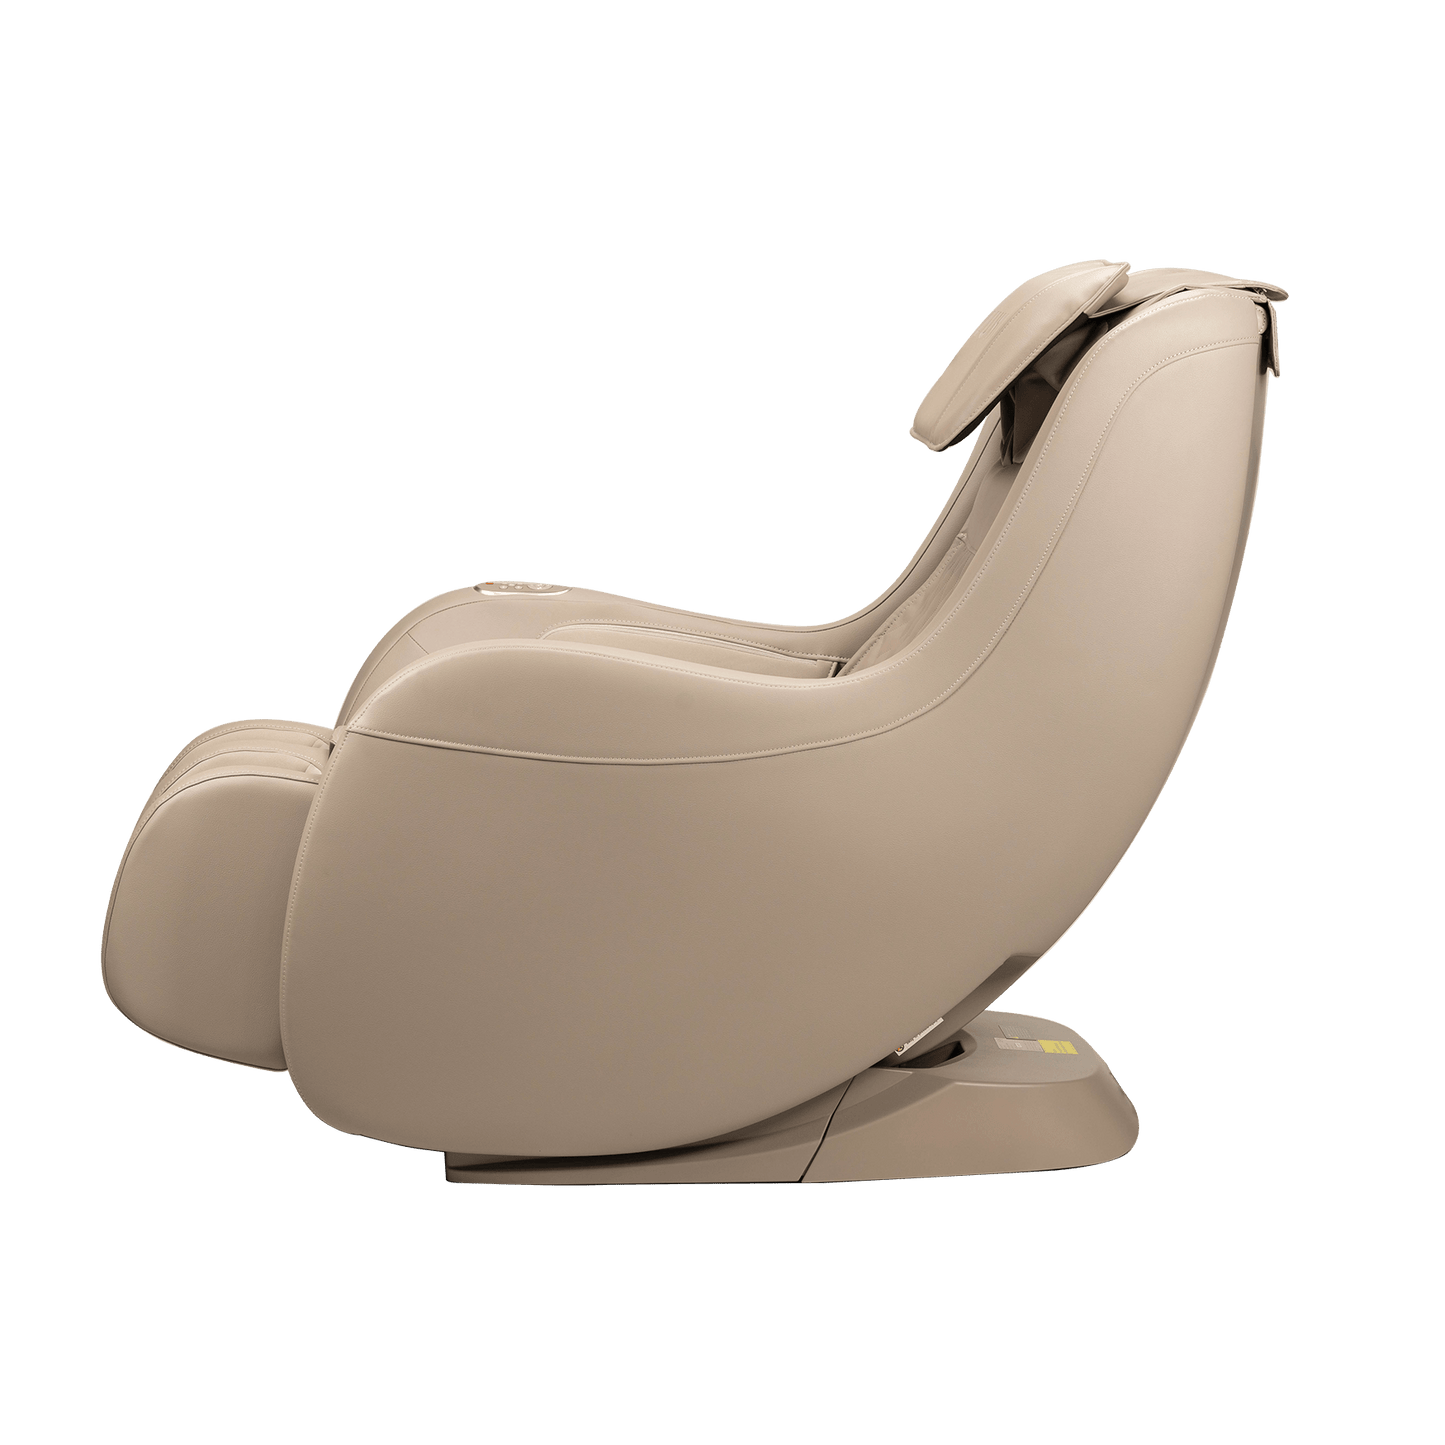 Lumi Yumi Compact Massage Chair - W.S. Industries, Inc.